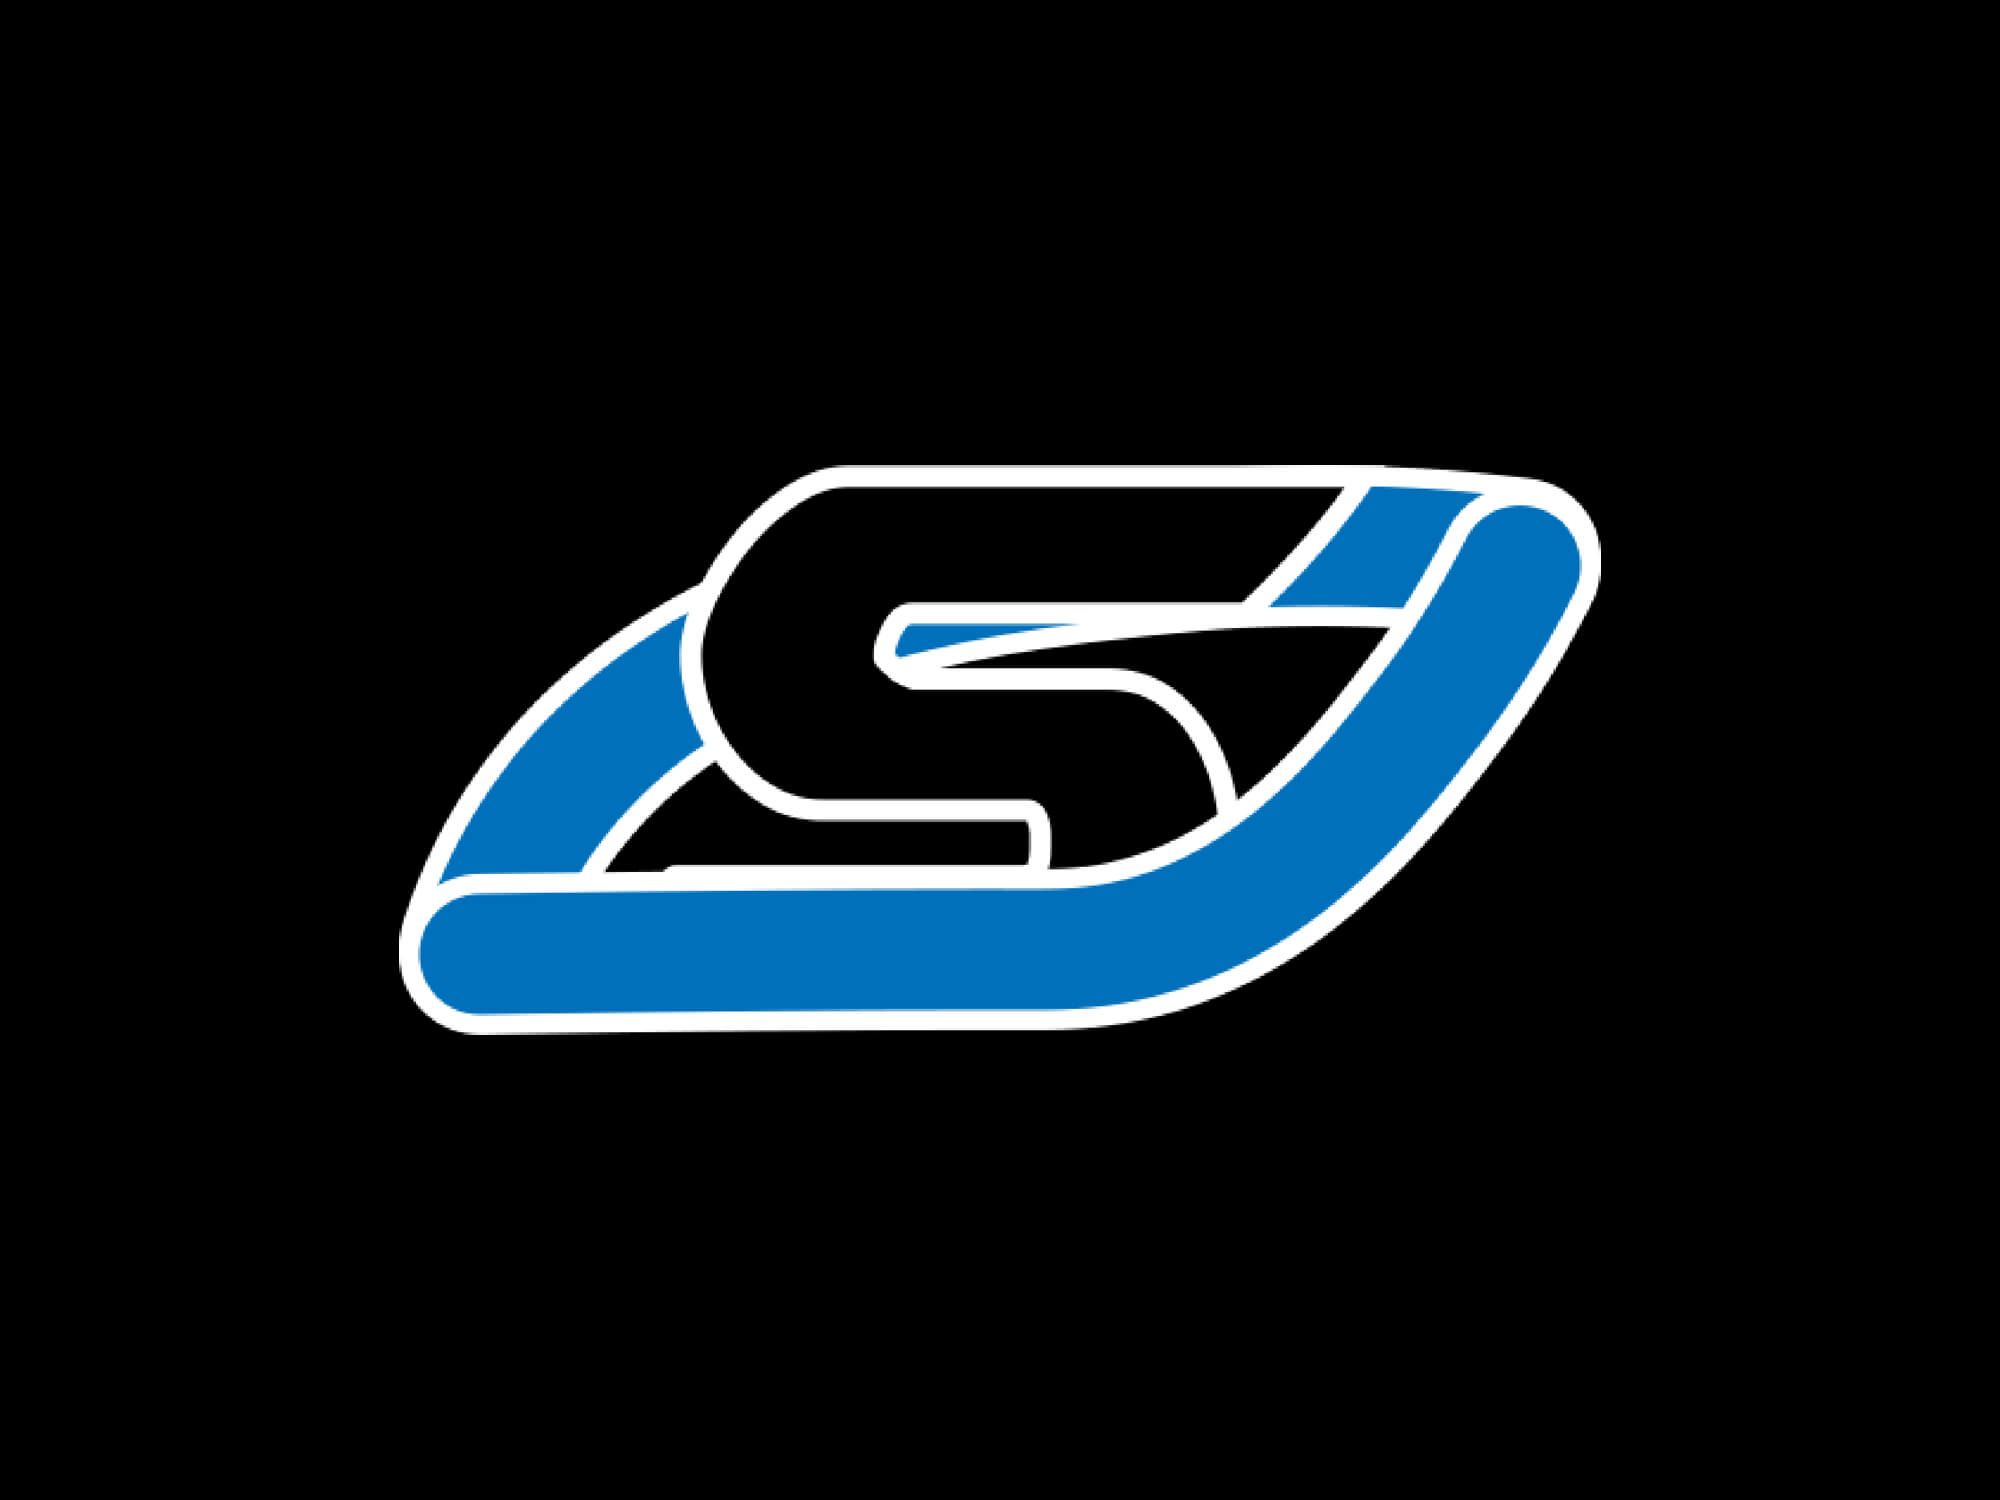 SafeSpace logo